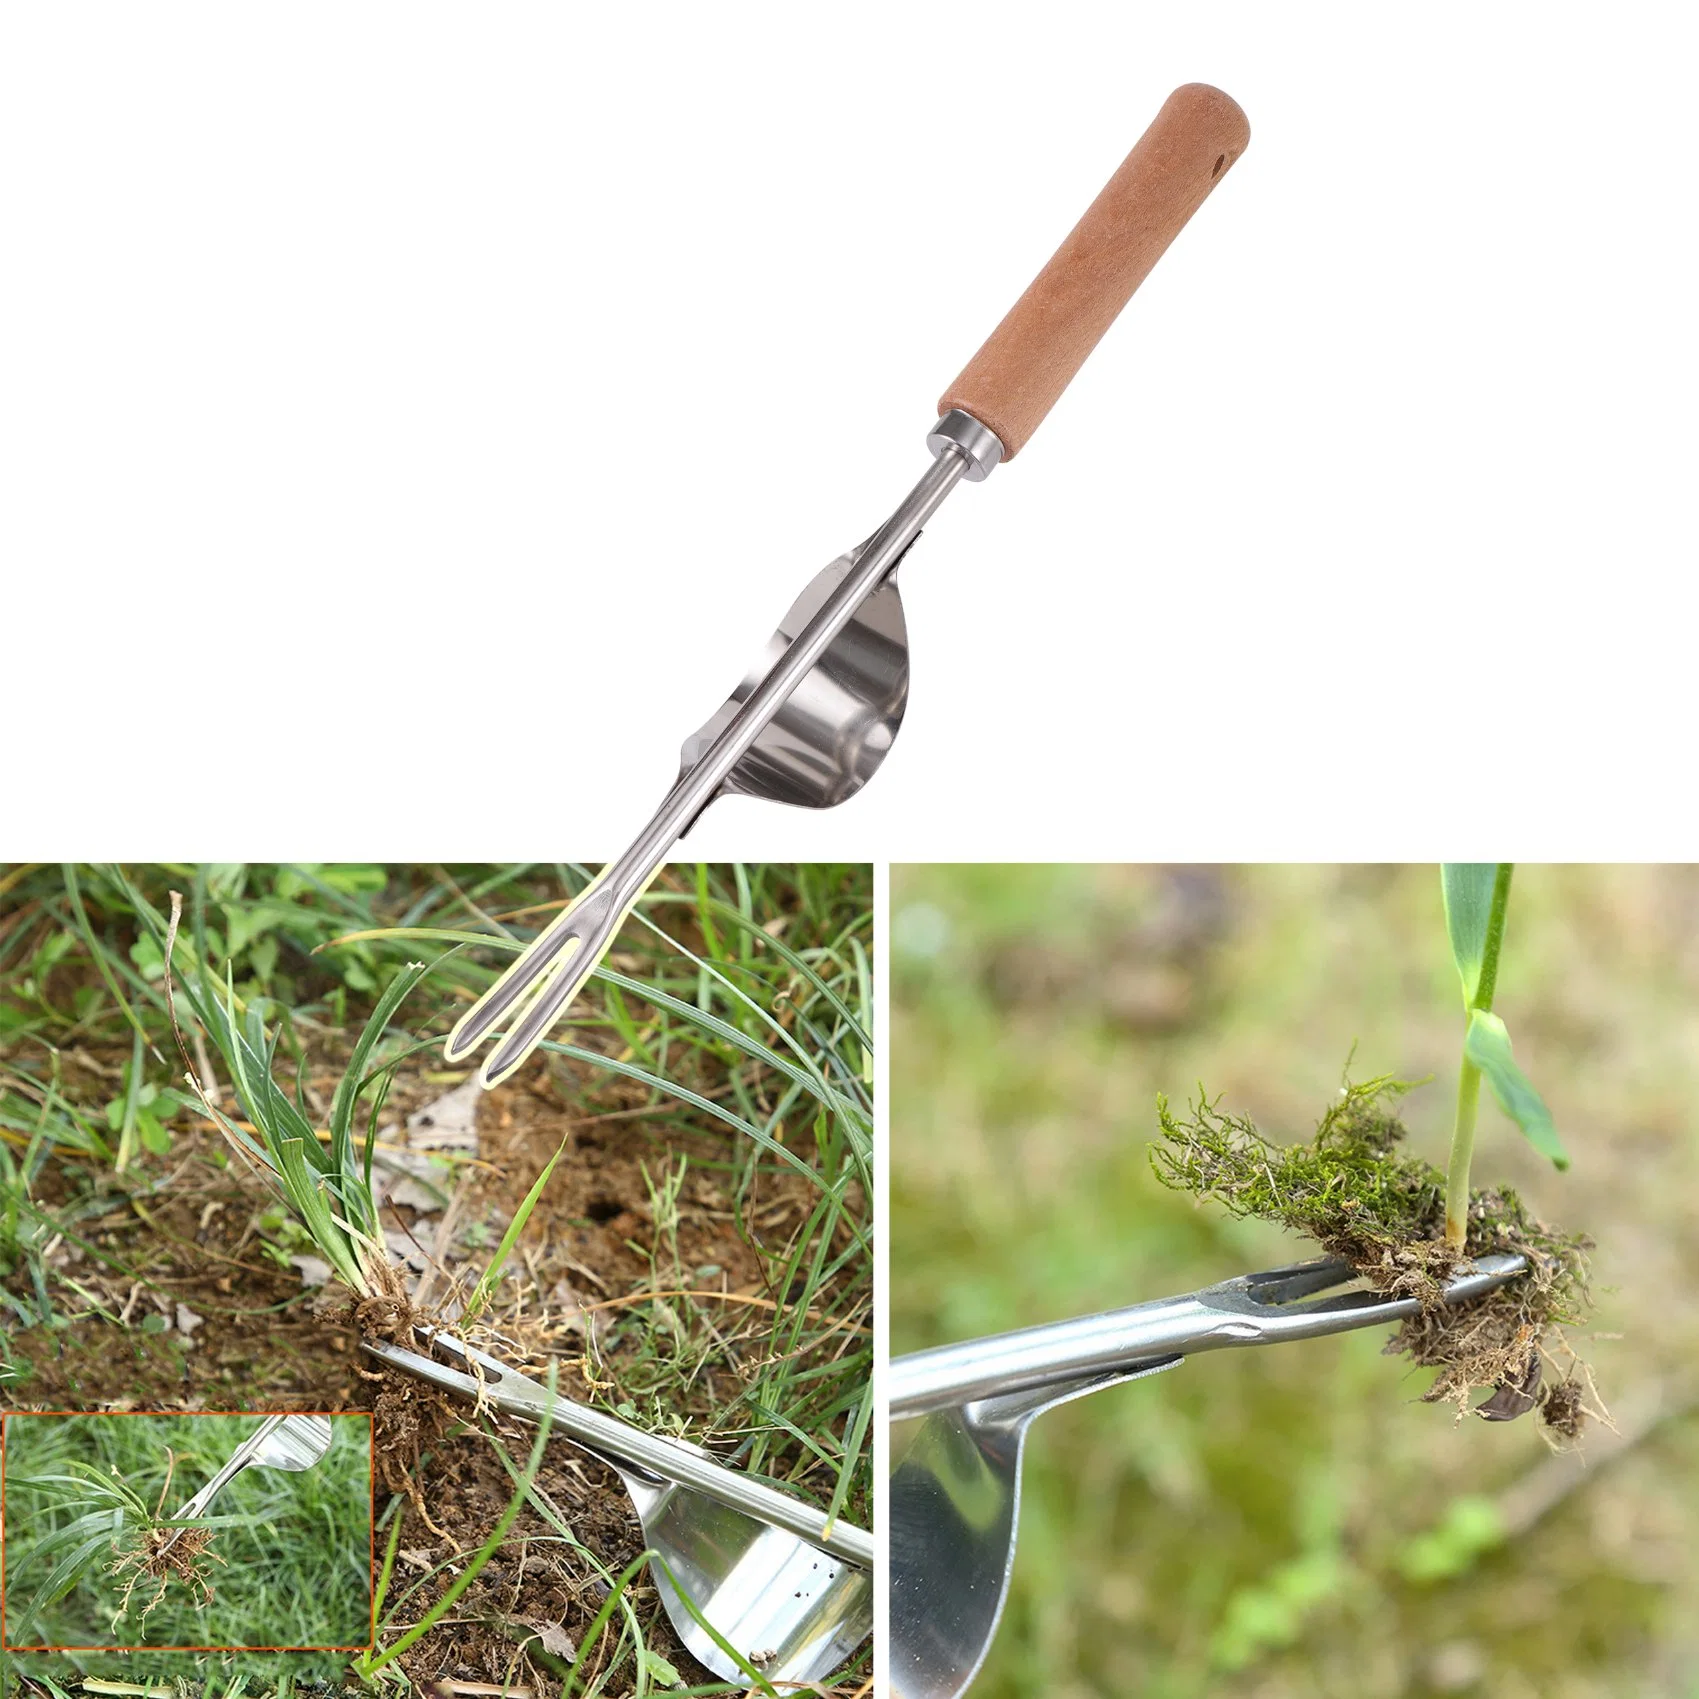 Wooden Handle Stainless Steel Manual Weeding Tool for Garden Digging Vegetable Transplant Seedling Weed Remover Tool